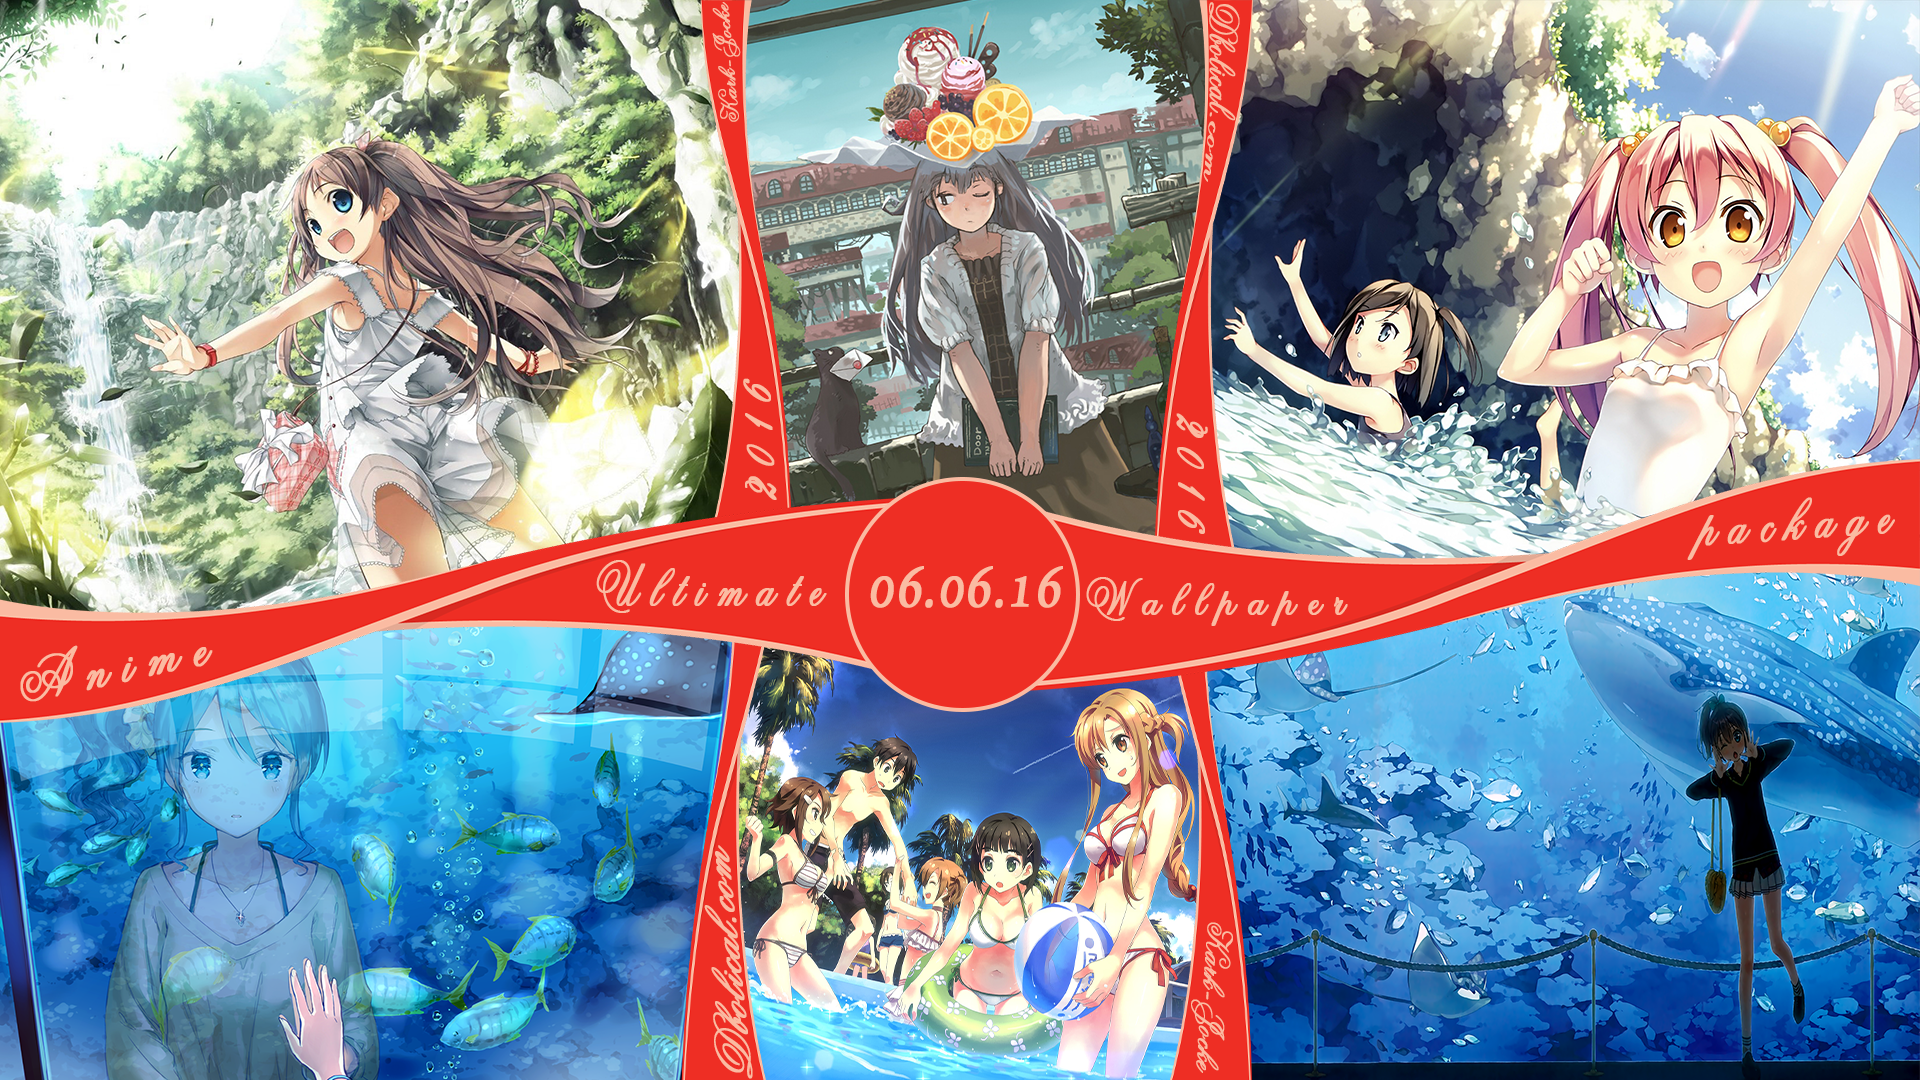 Old Anime Wallpaper's (Full-HD) - 16.06.14 file - ModDB